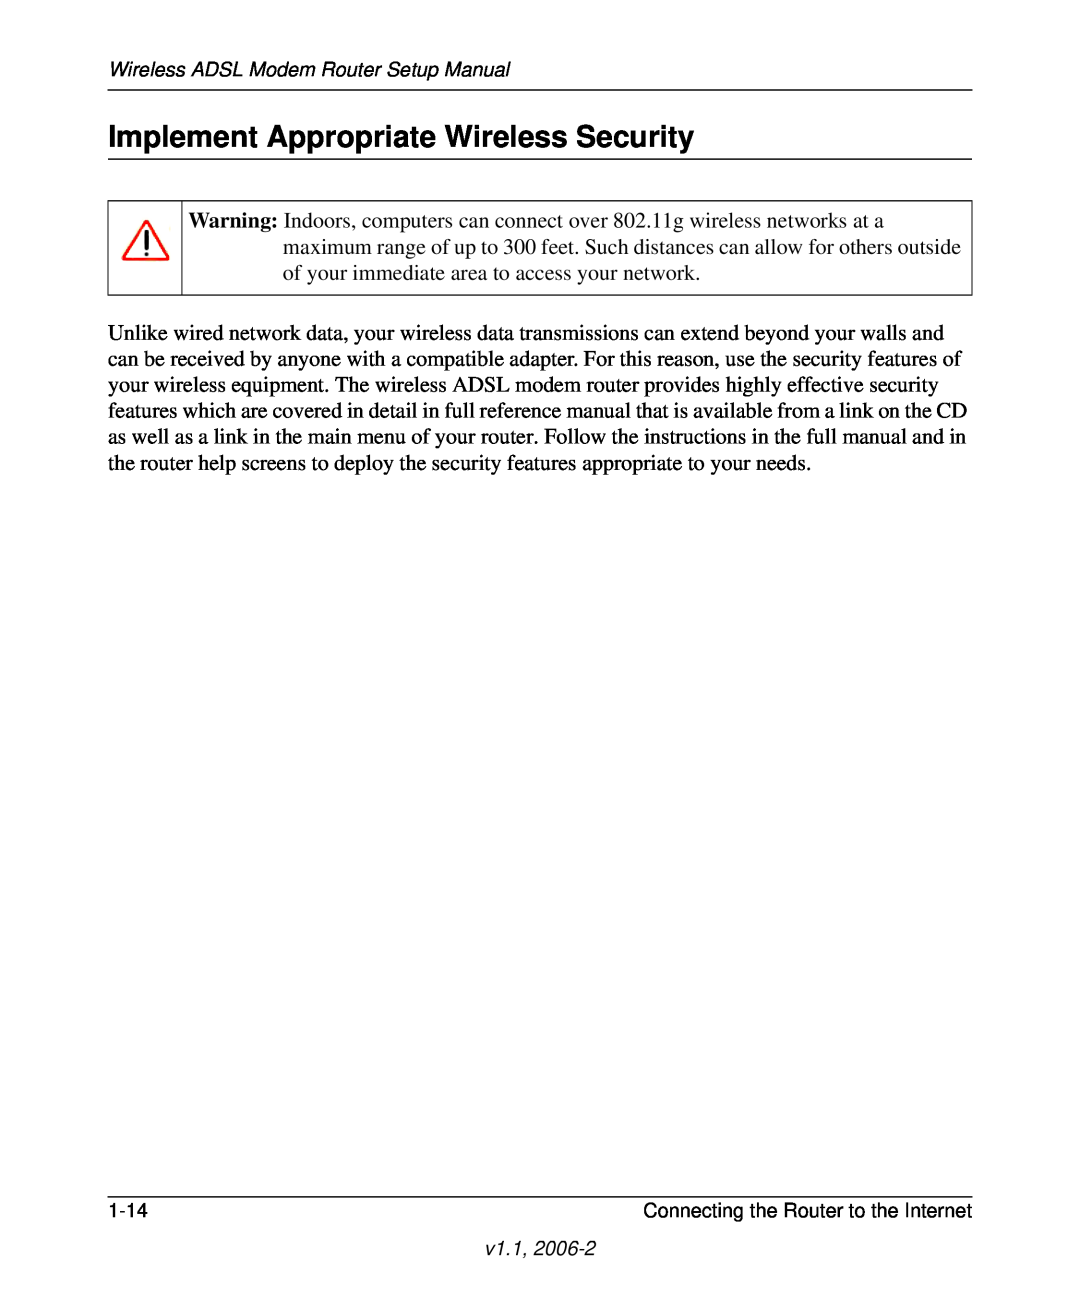 NETGEAR Wireless ADSL Modem Router manual Implement Appropriate Wireless Security 